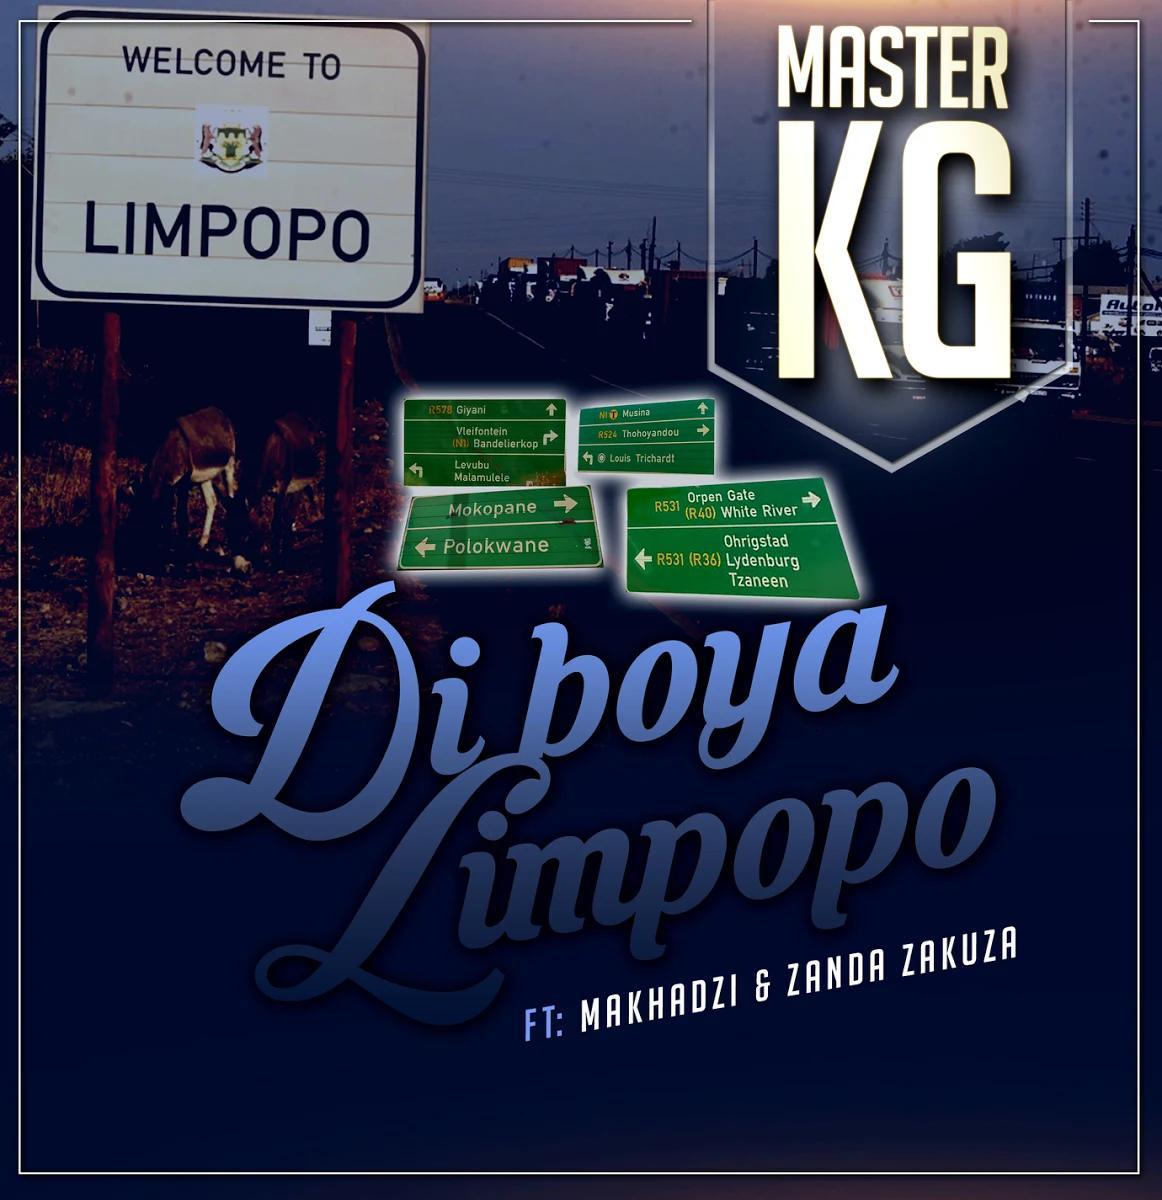 Master KG - Di Boya Limpopo (feat. Zanda Zakuza & Makhadzi) 2019 DOWNLOAD MP3 - Portal Moz News